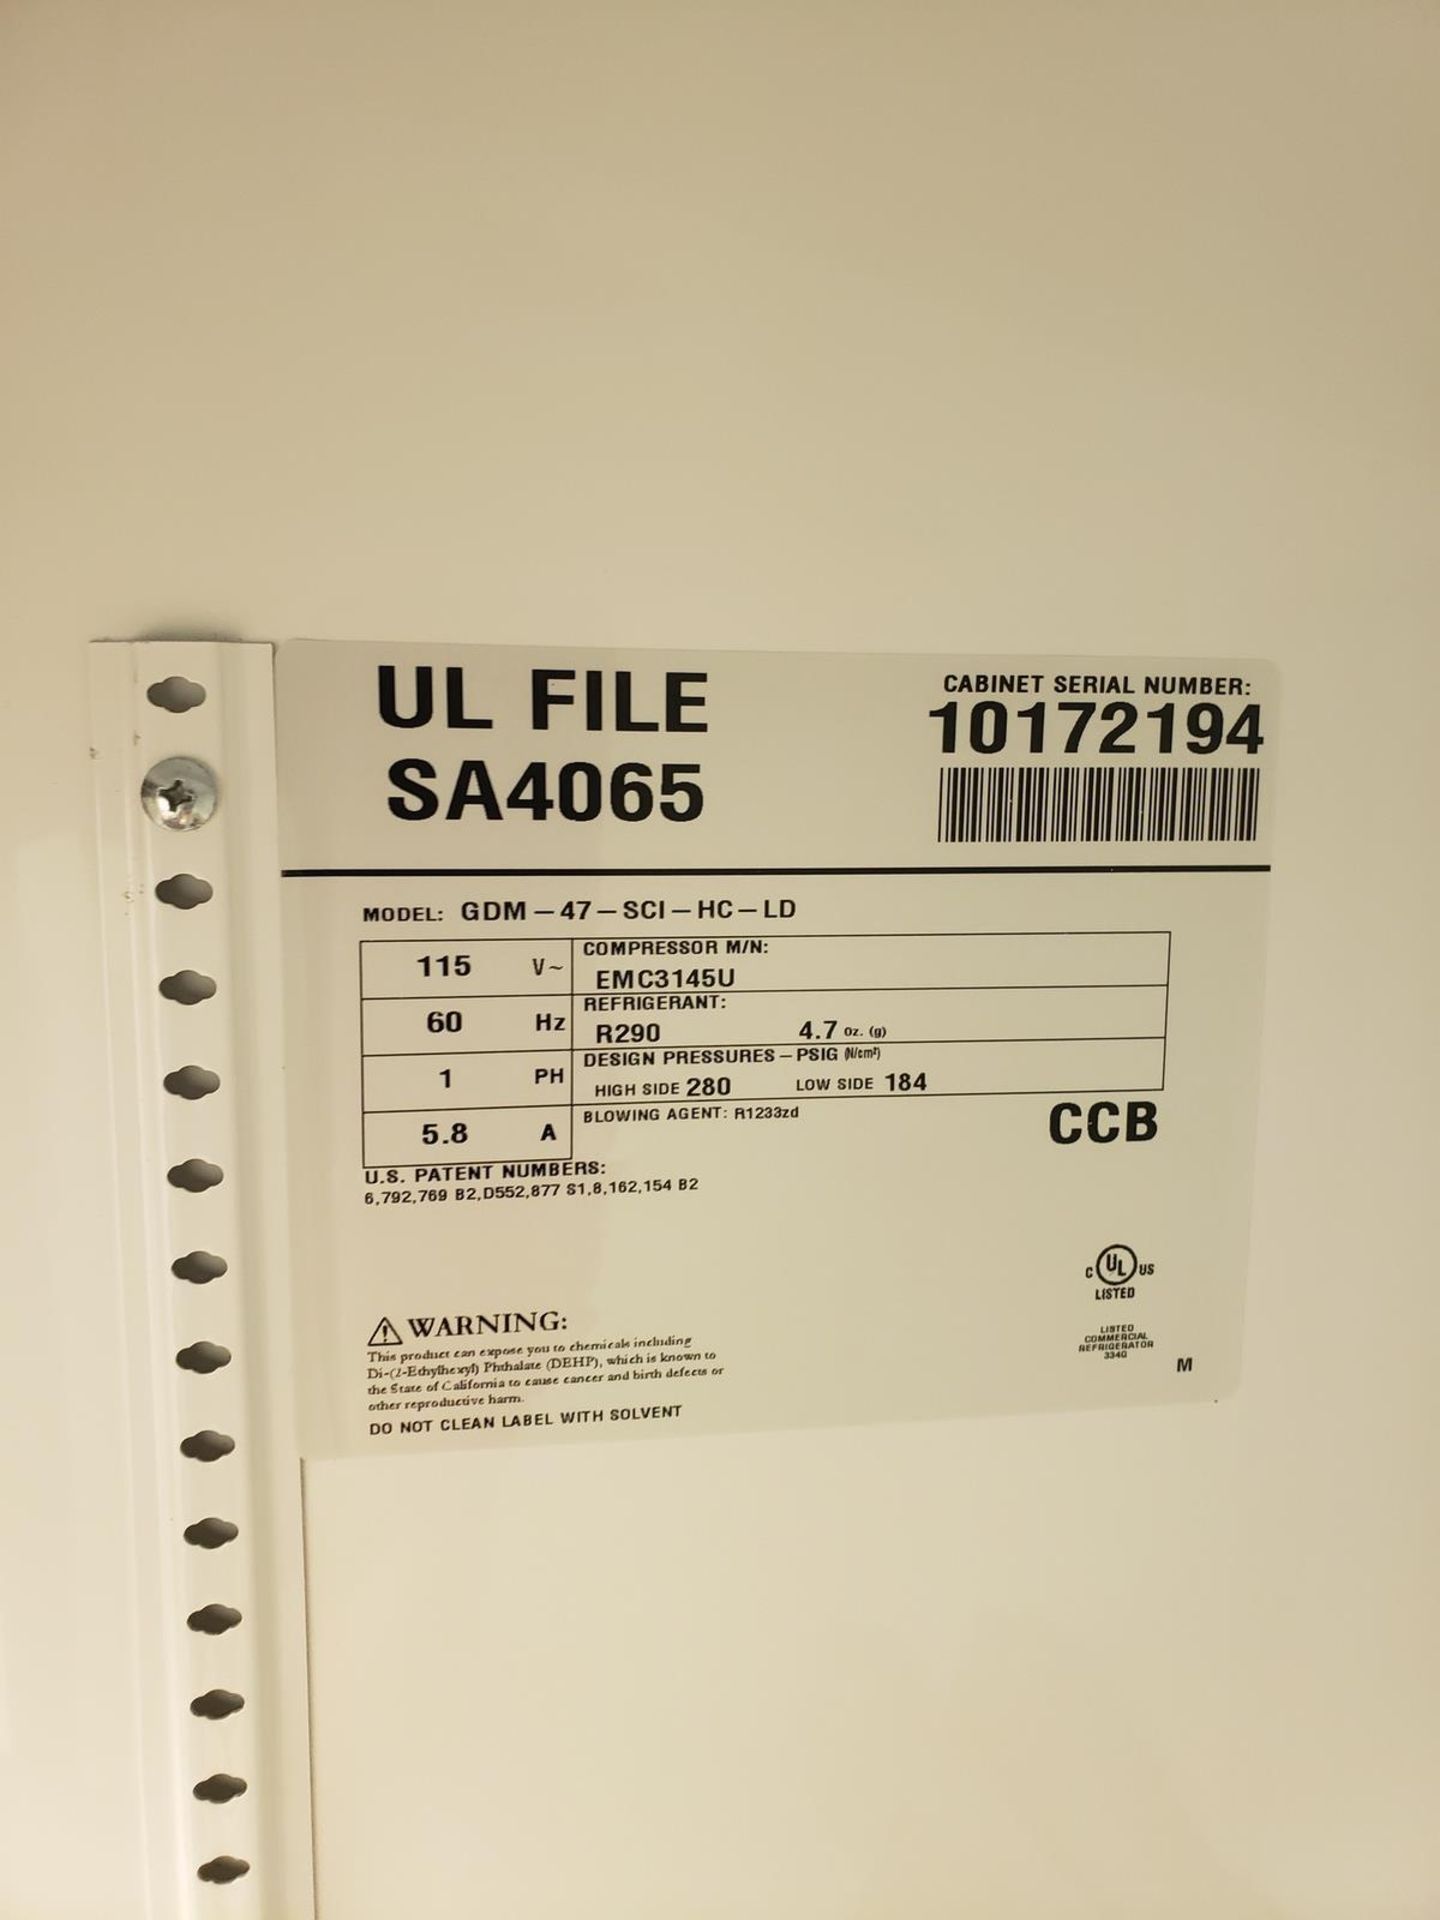 VWR Refrigerator, M# GDM-47-SCI-HC-LD, S/N 10172194 - Image 2 of 2